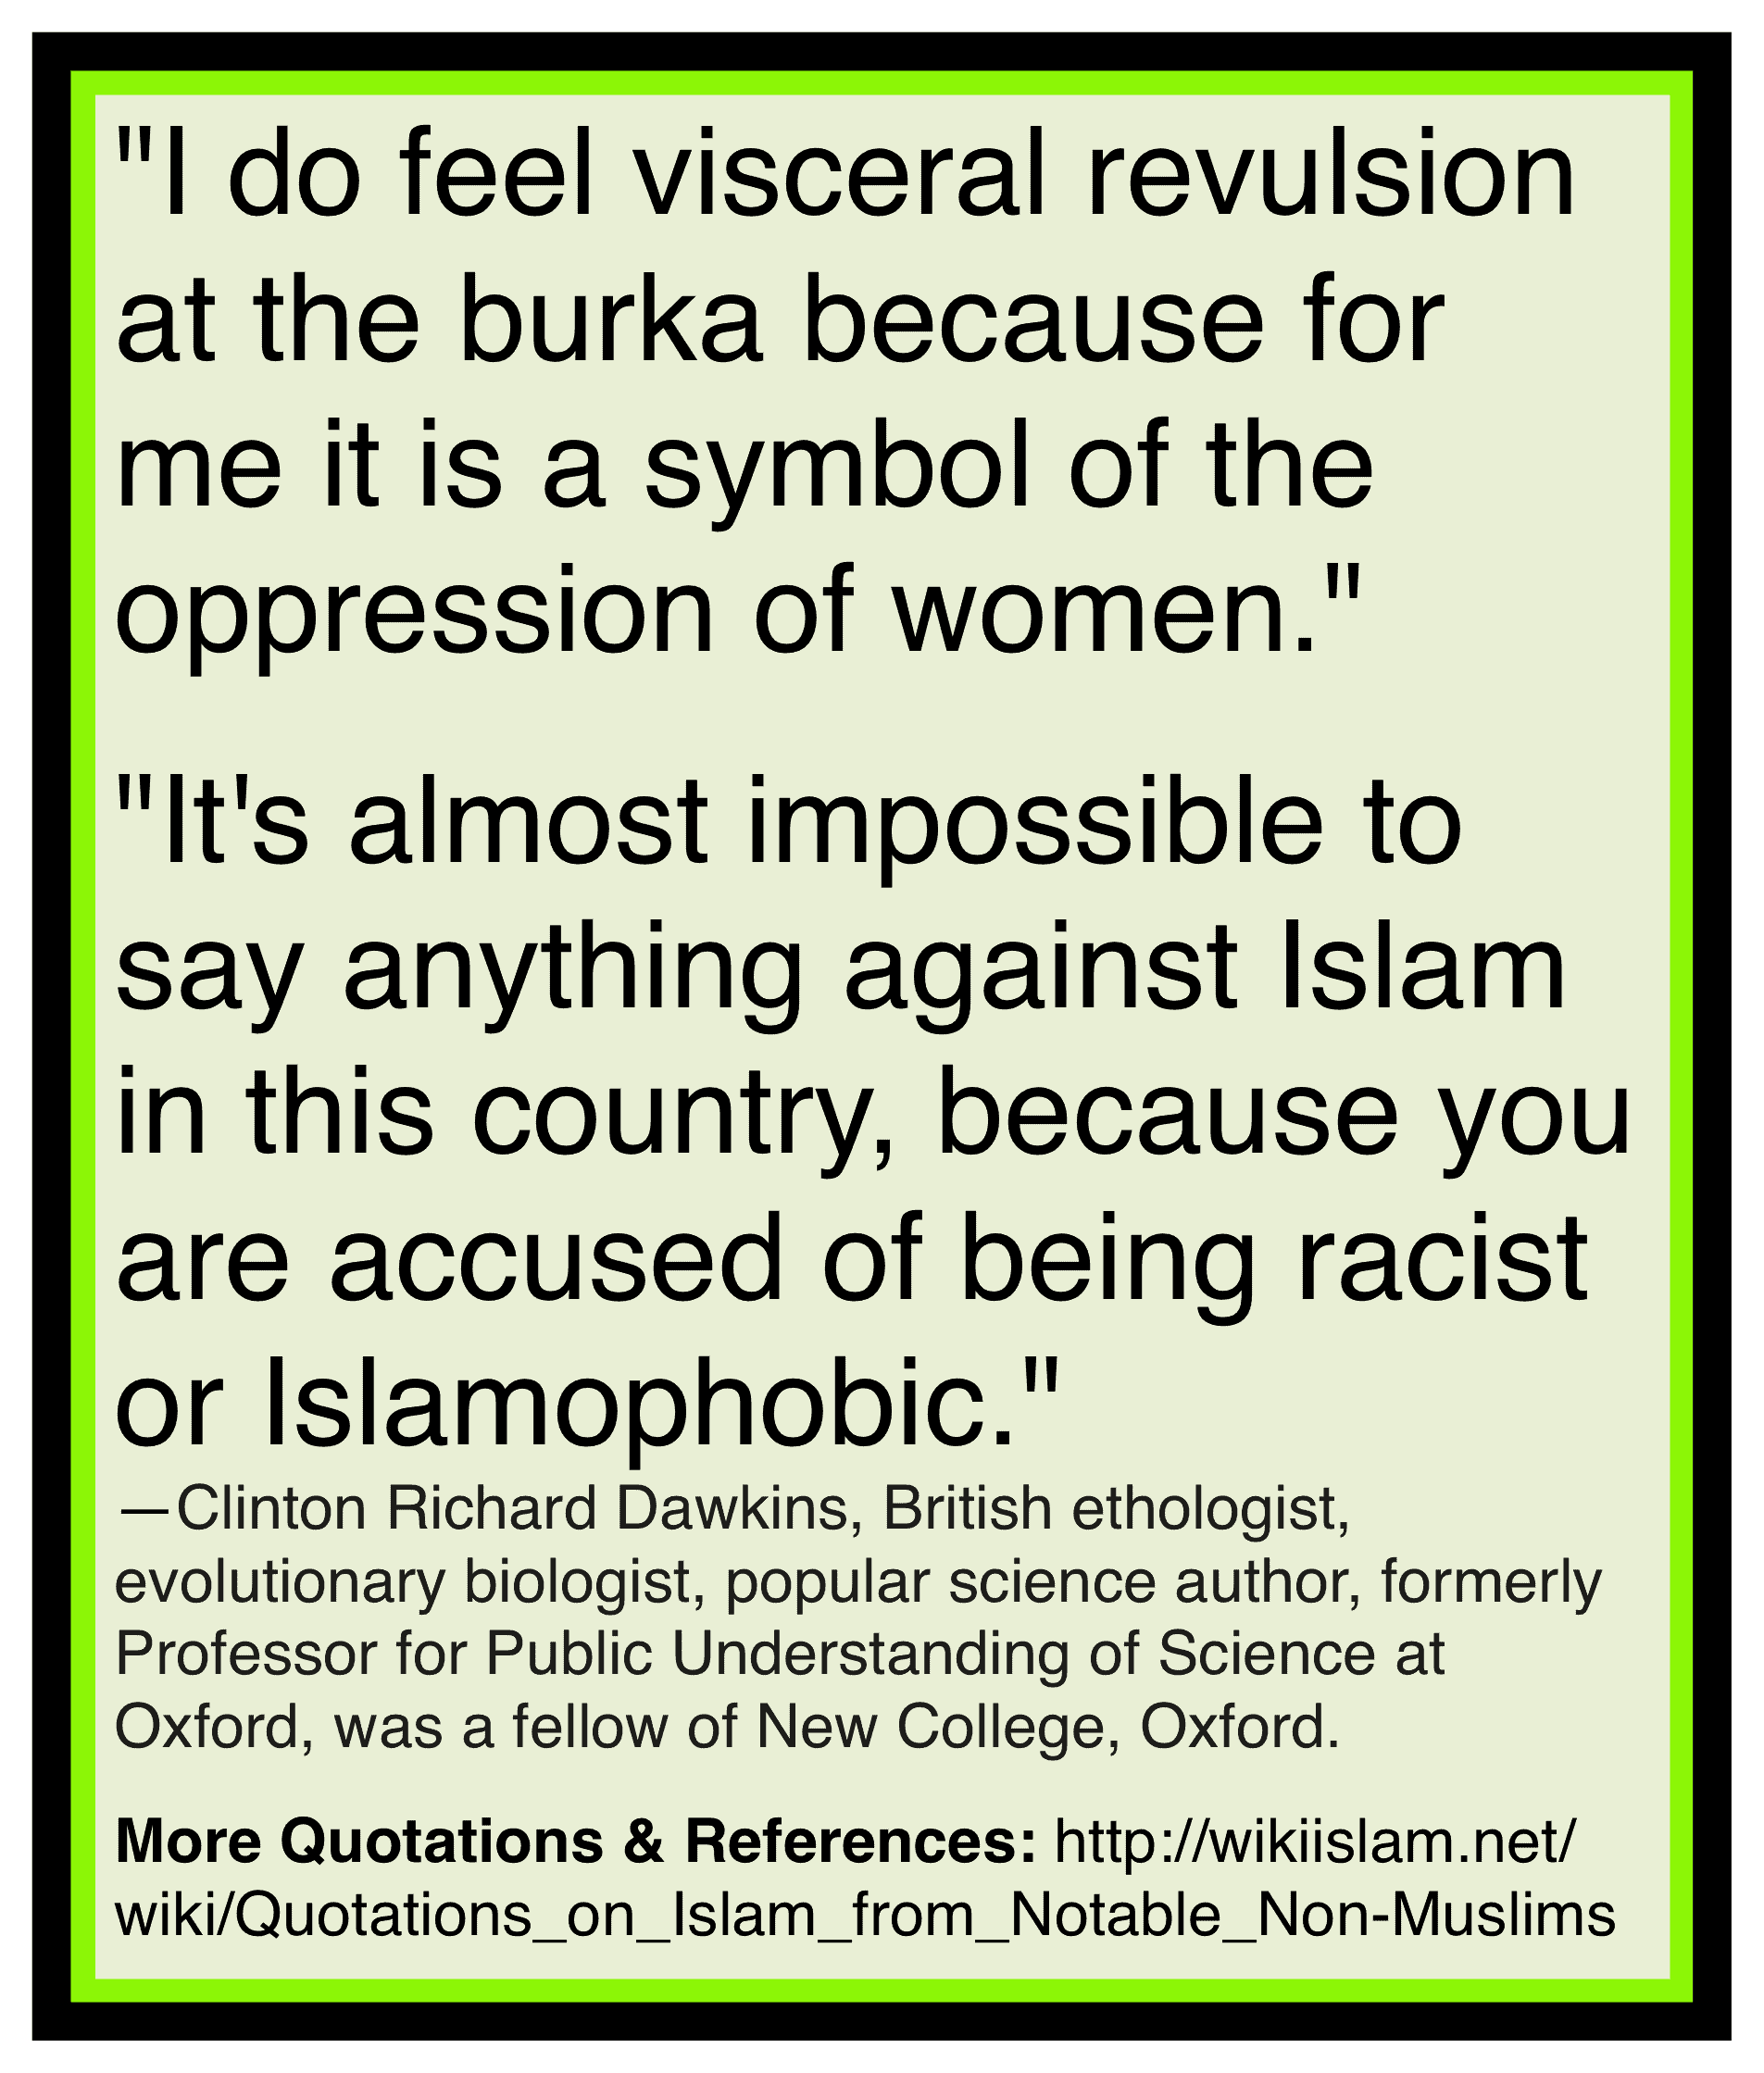 Hijab and burka repulsive